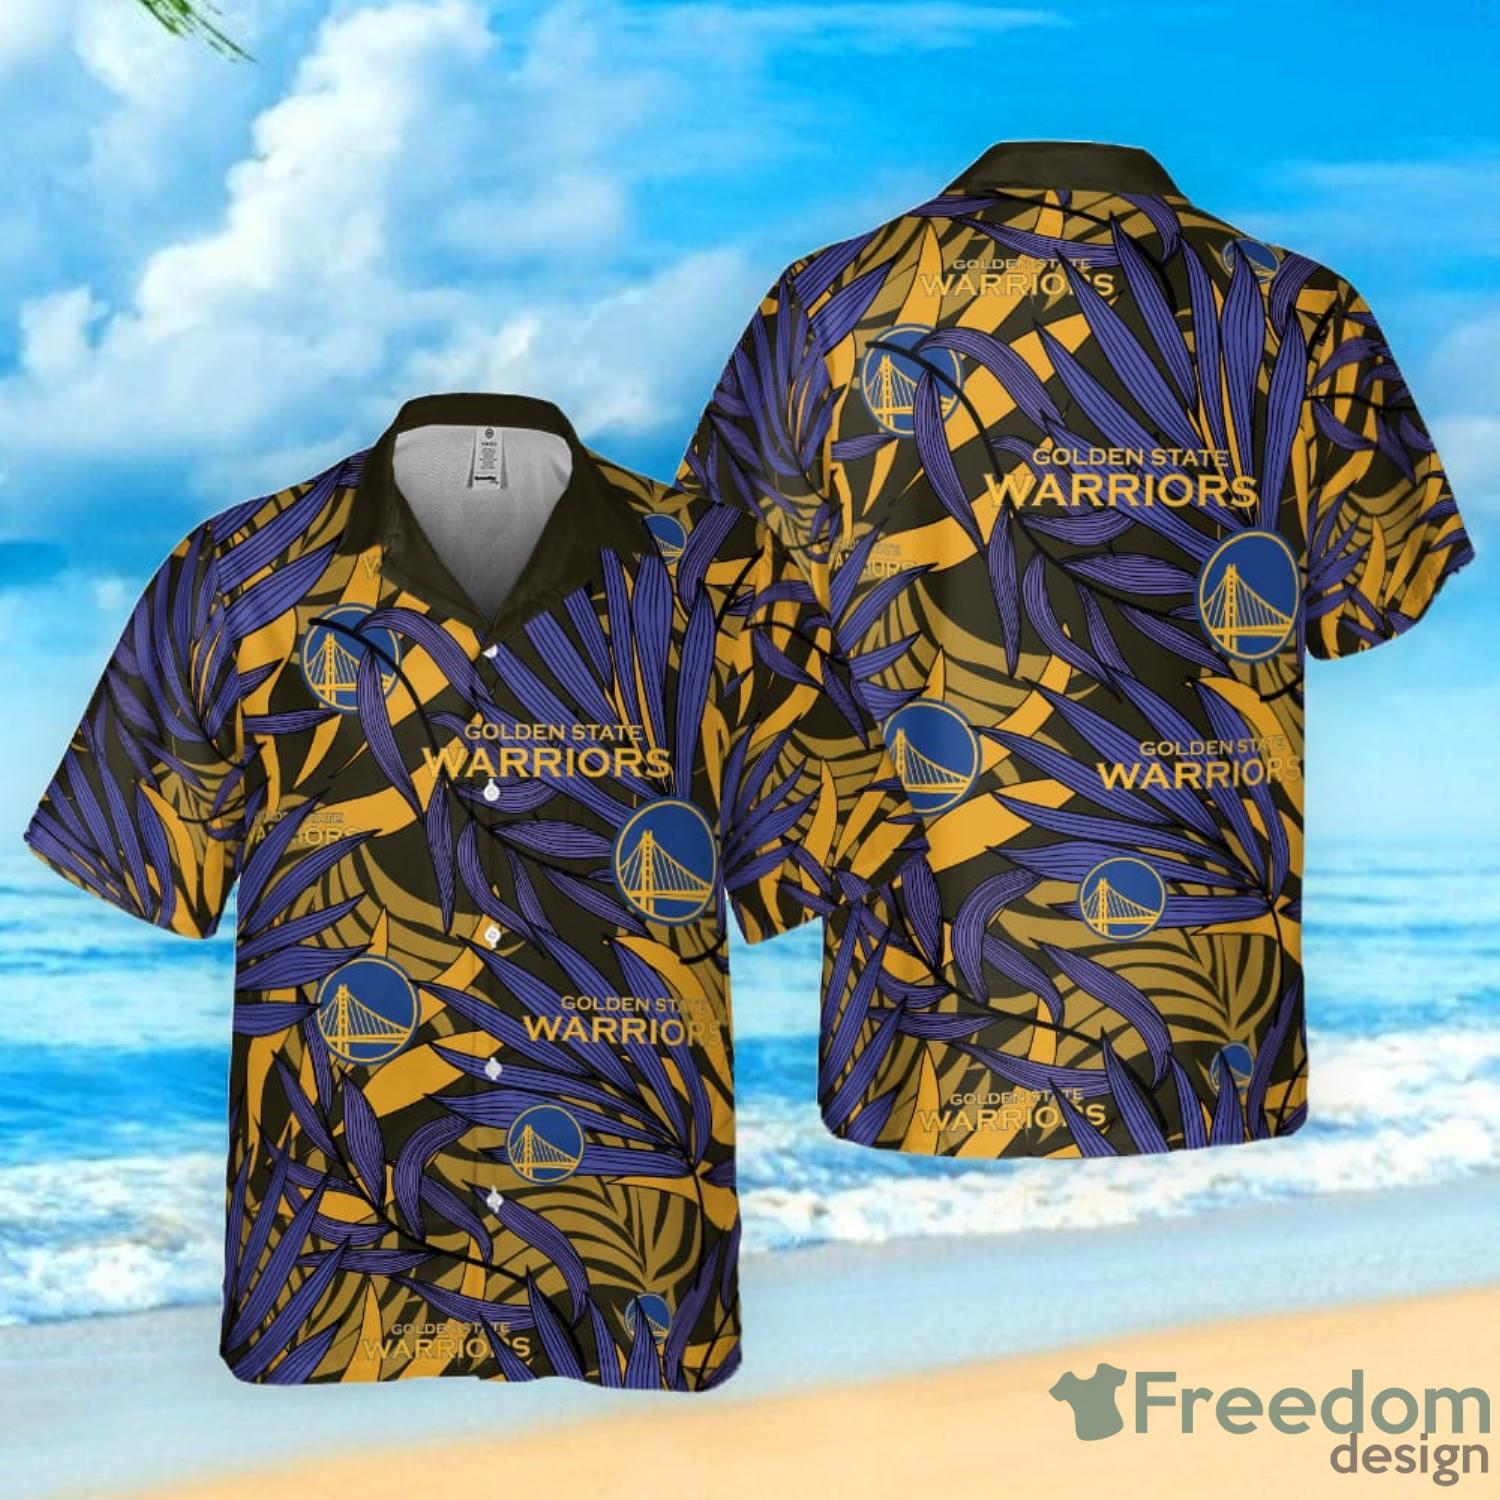 New] Gsw 2021 jersey nba hawaiian shirt - Alishirts  Golden state  warriors, Hawaiian shirt, Nba golden state warriors